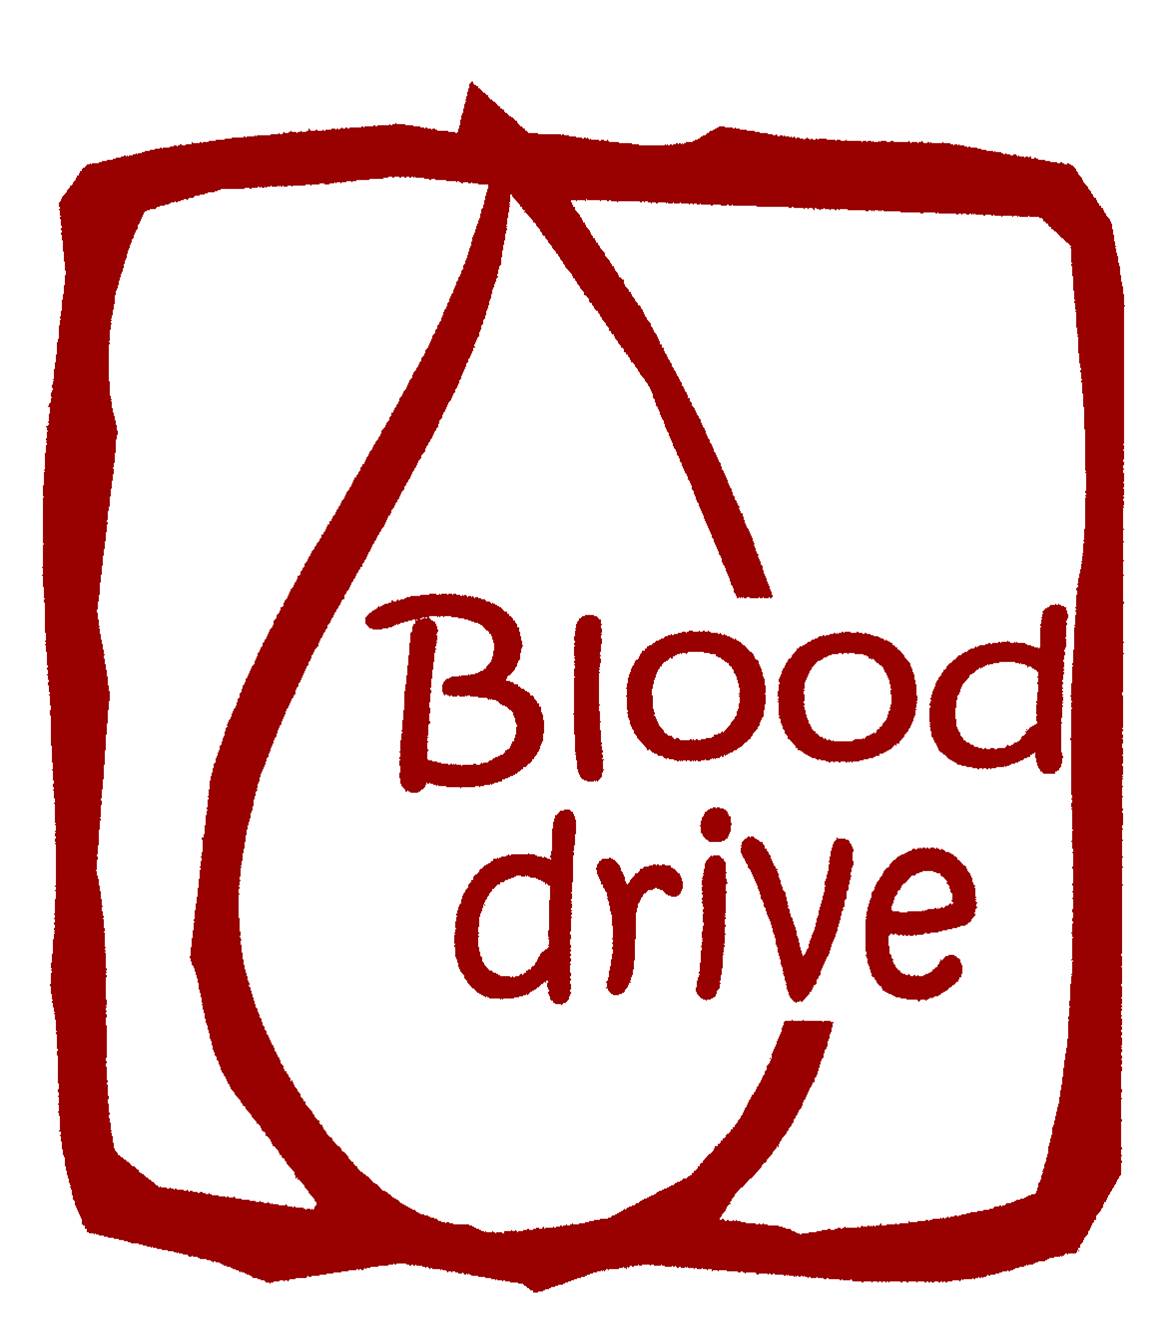 ... Community Blood Drive , H